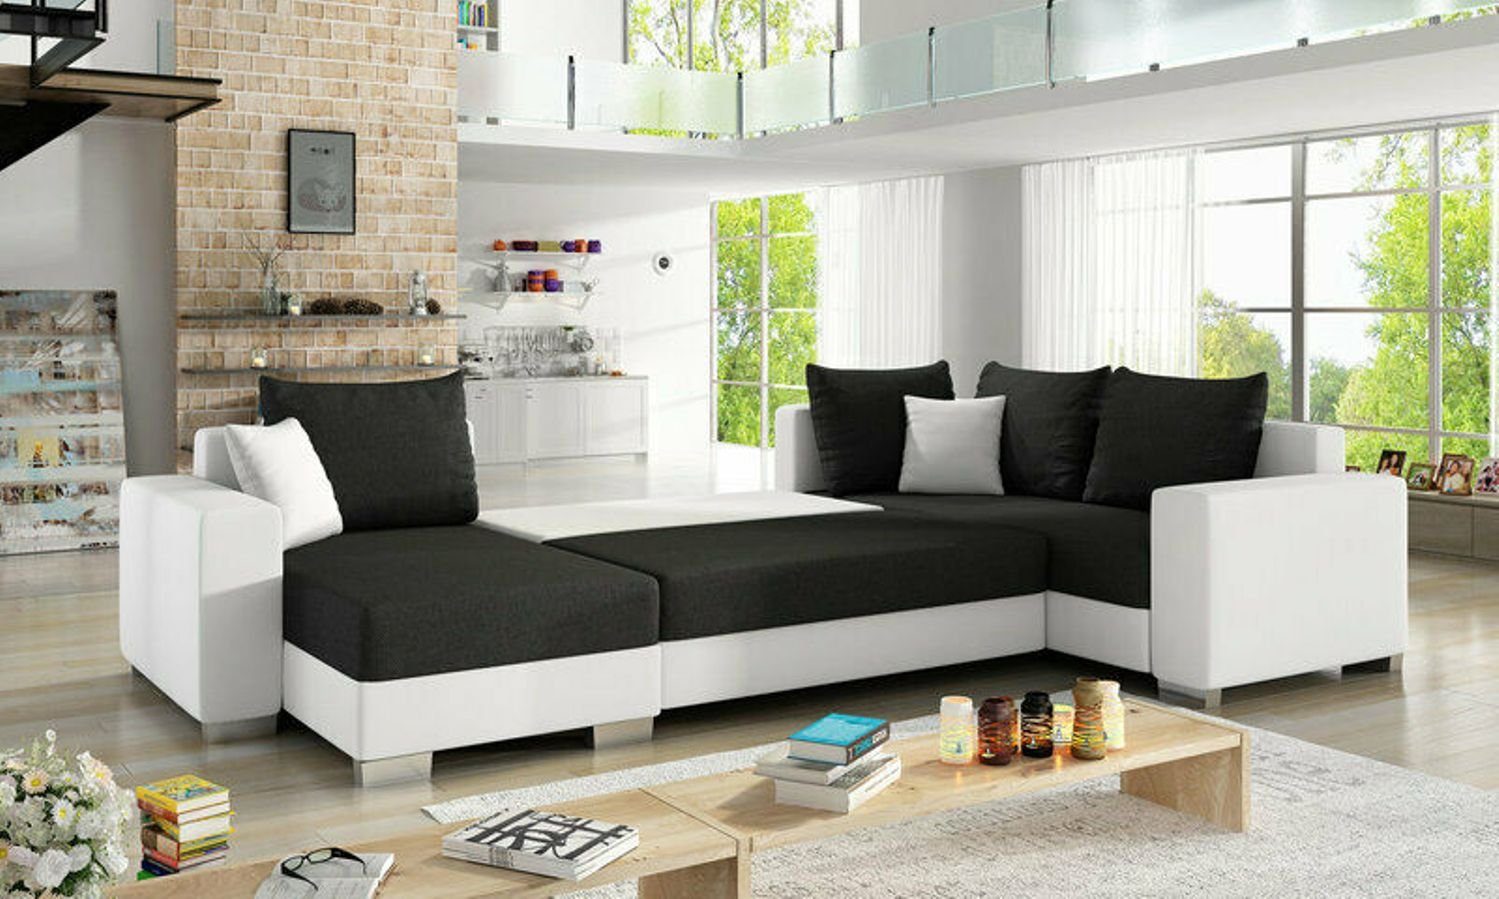 JVmoebel Ecksofa Design Ecksofa Schlafsofa Bettfunktion Couch Leder Polster Textil, Mit Bettfunktion Schwarz/Weiß | Ecksofas